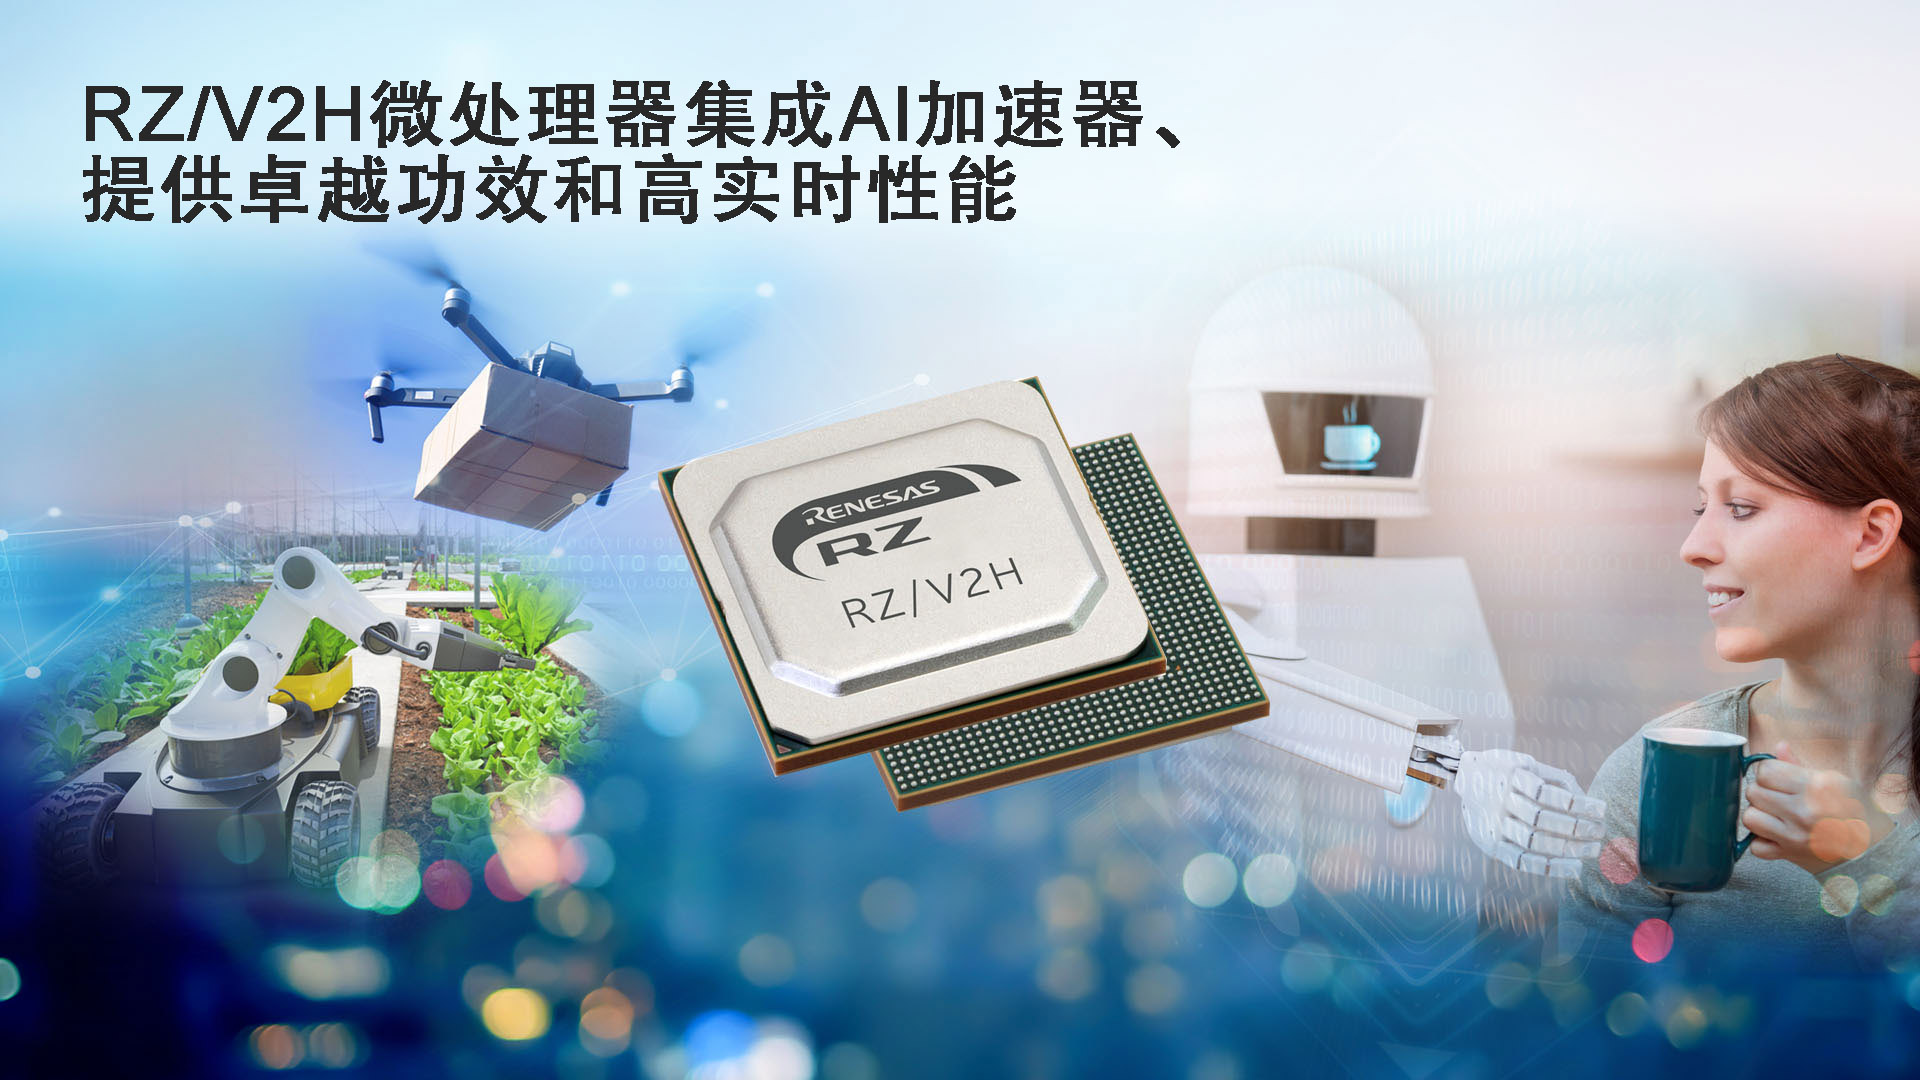 RZ／V2H微处理器集成Al加速器、提供卓越功效和高实时性能.jpg